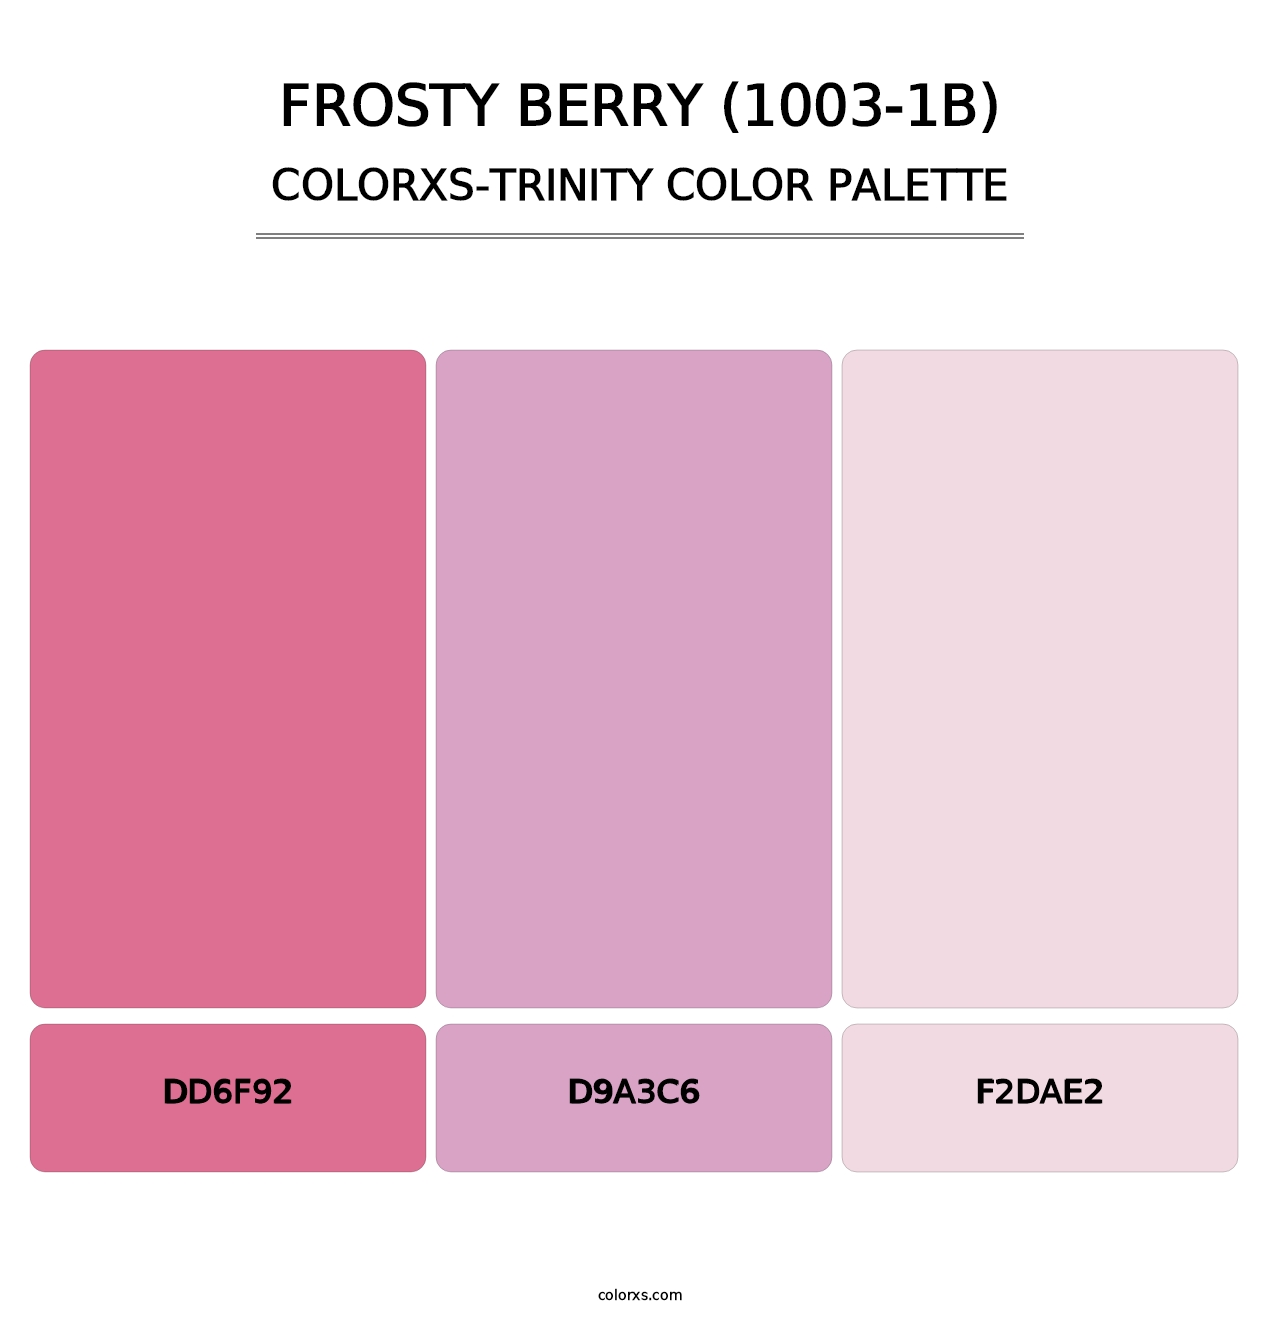 Frosty Berry (1003-1B) - Colorxs Trinity Palette